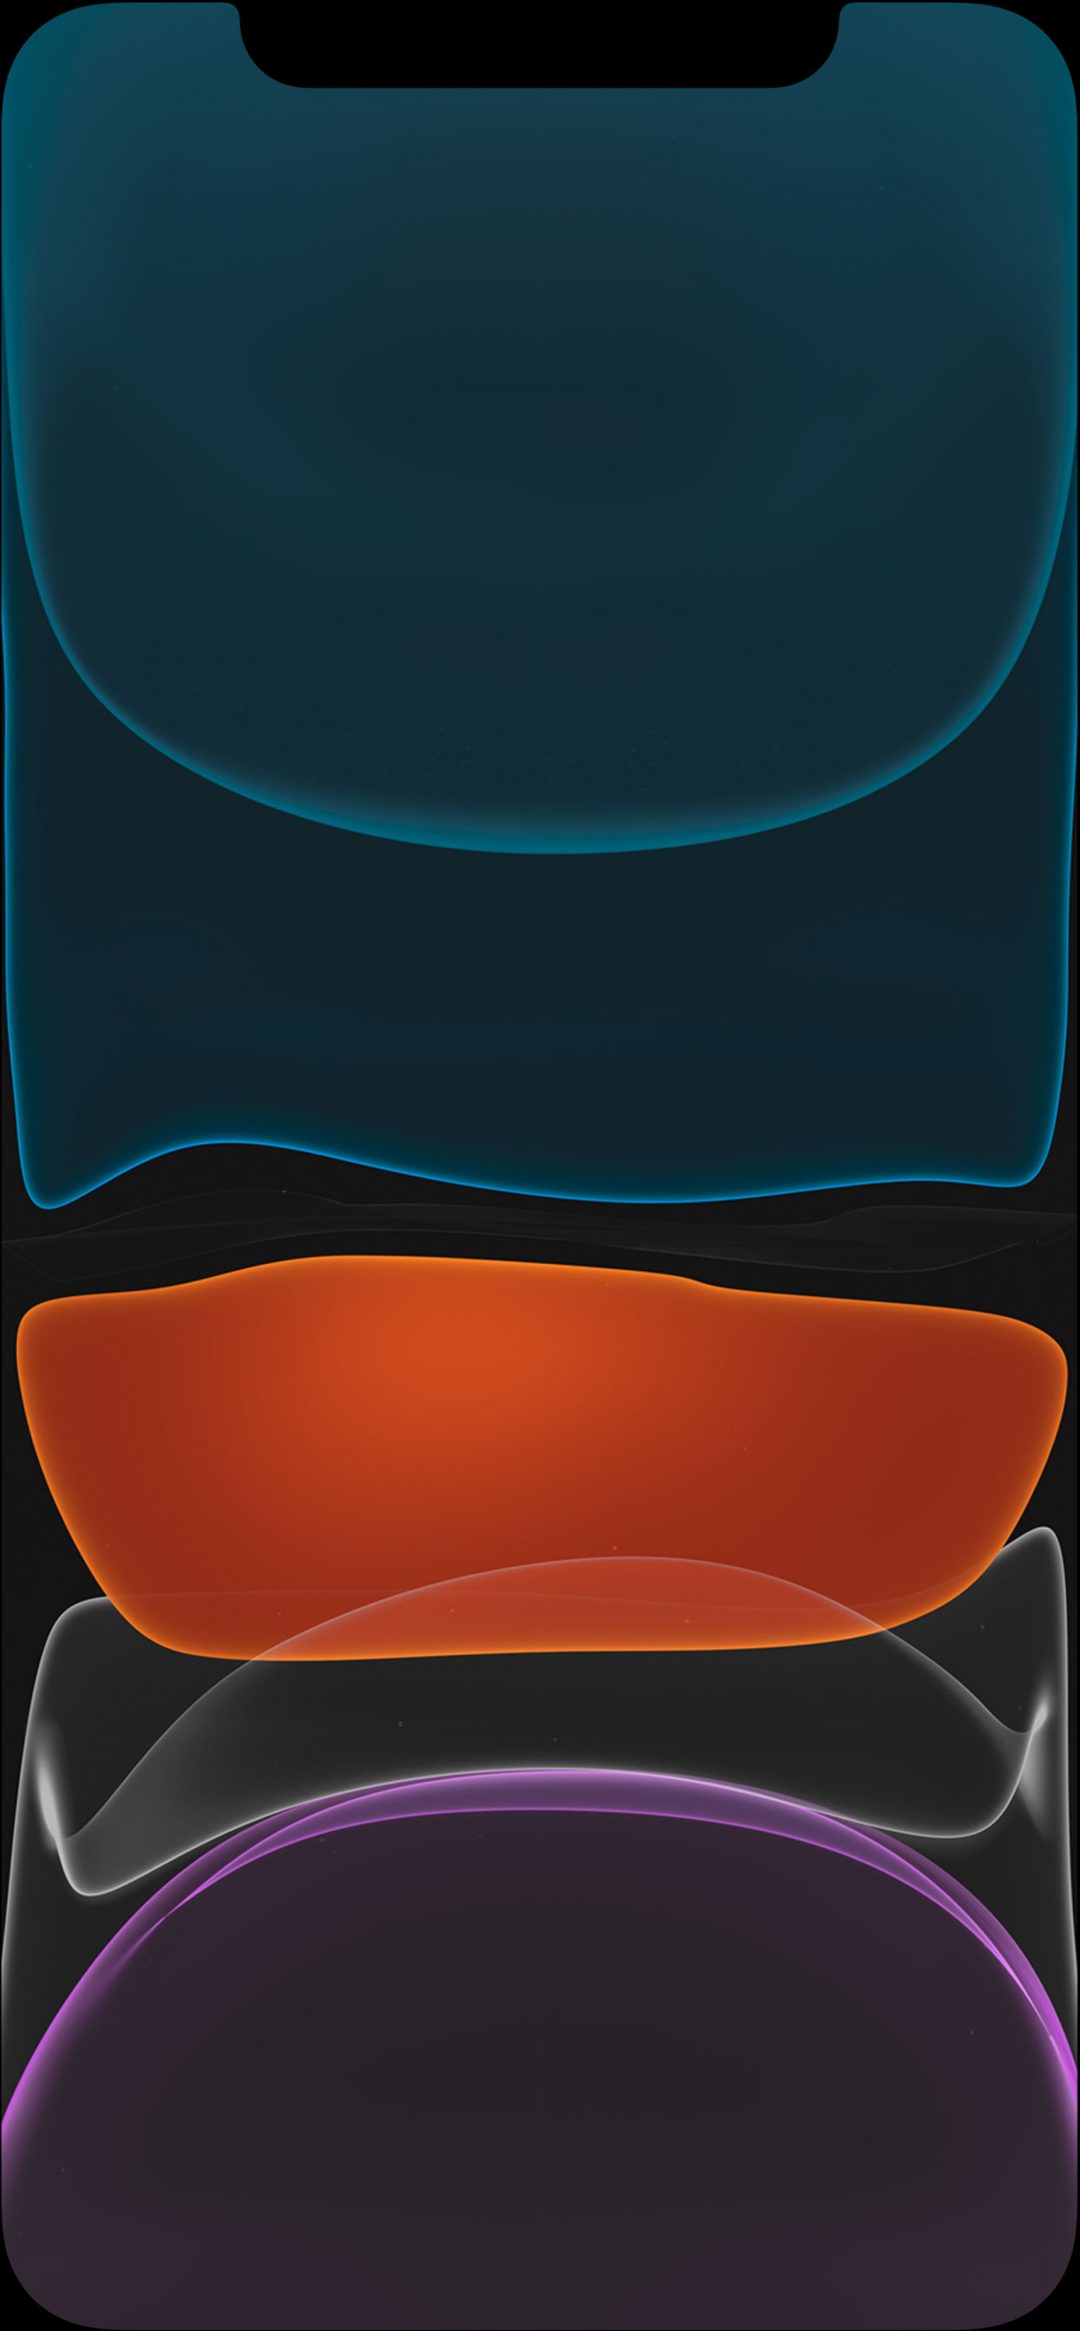 iphone wallpaper,blue,orange,electric blue,design,material property